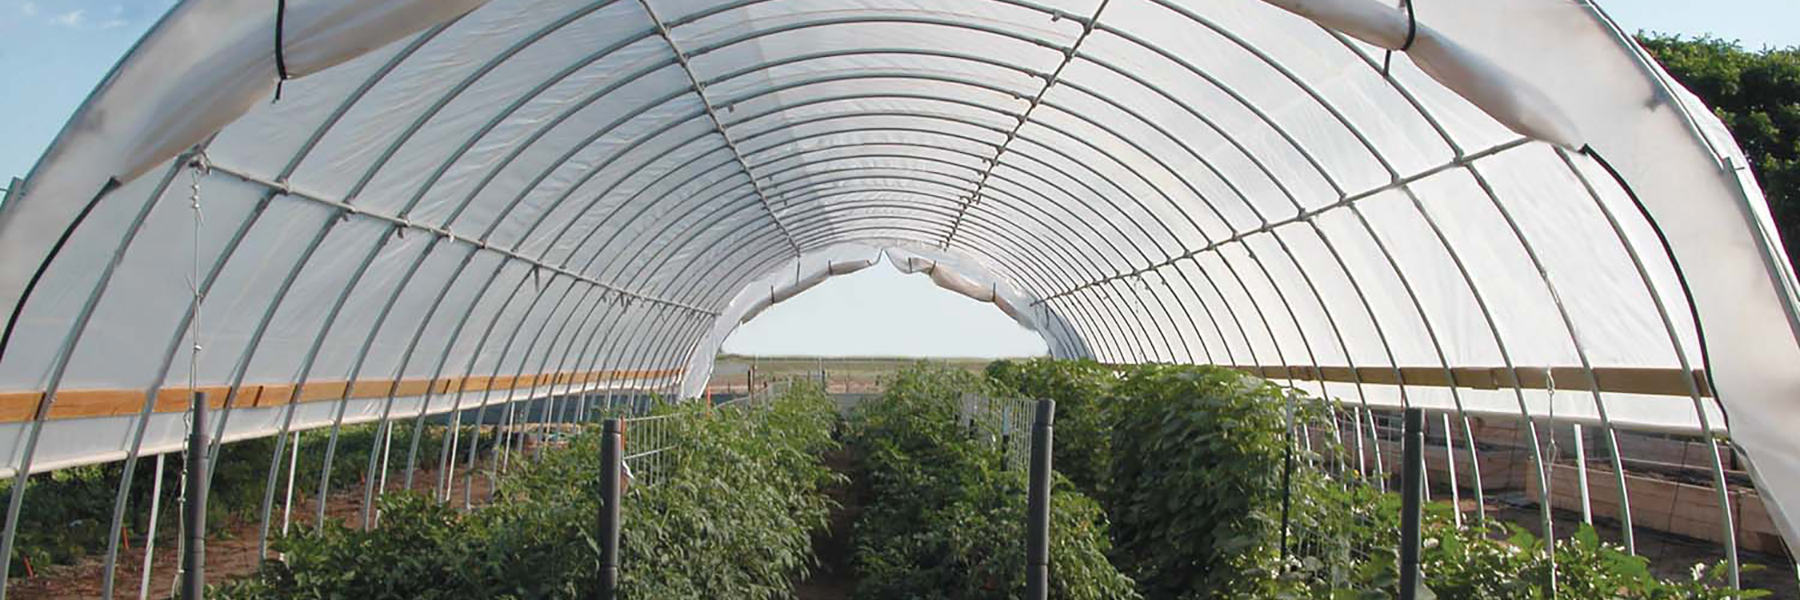 high tunnel greenhouse kits